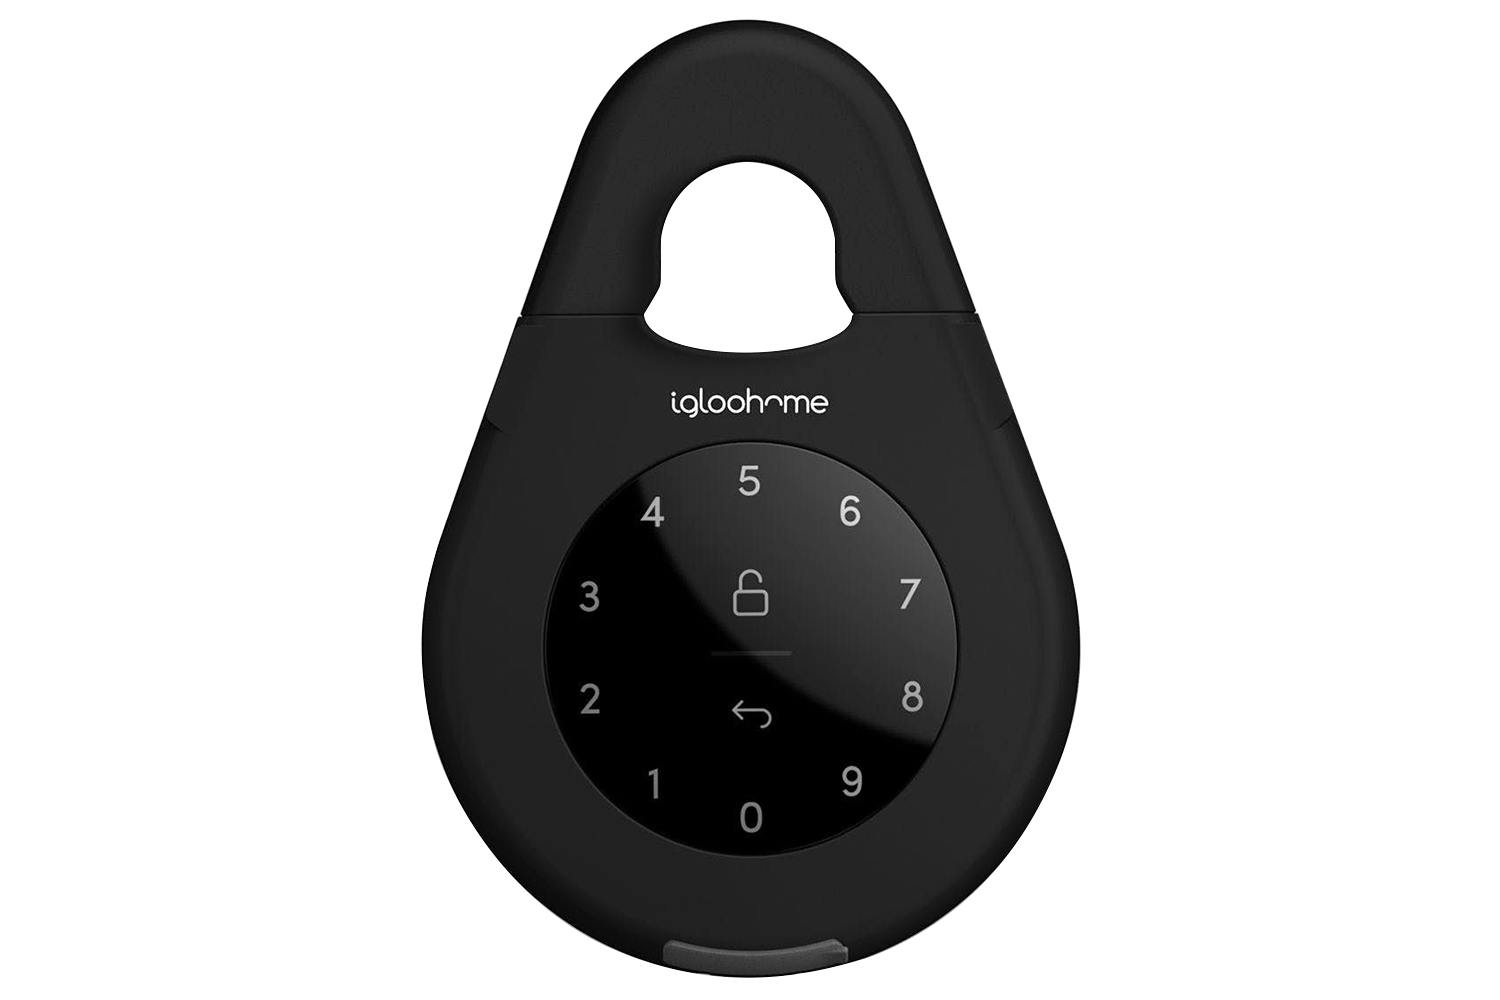 Igloohome Keybox 3 Smart Lock